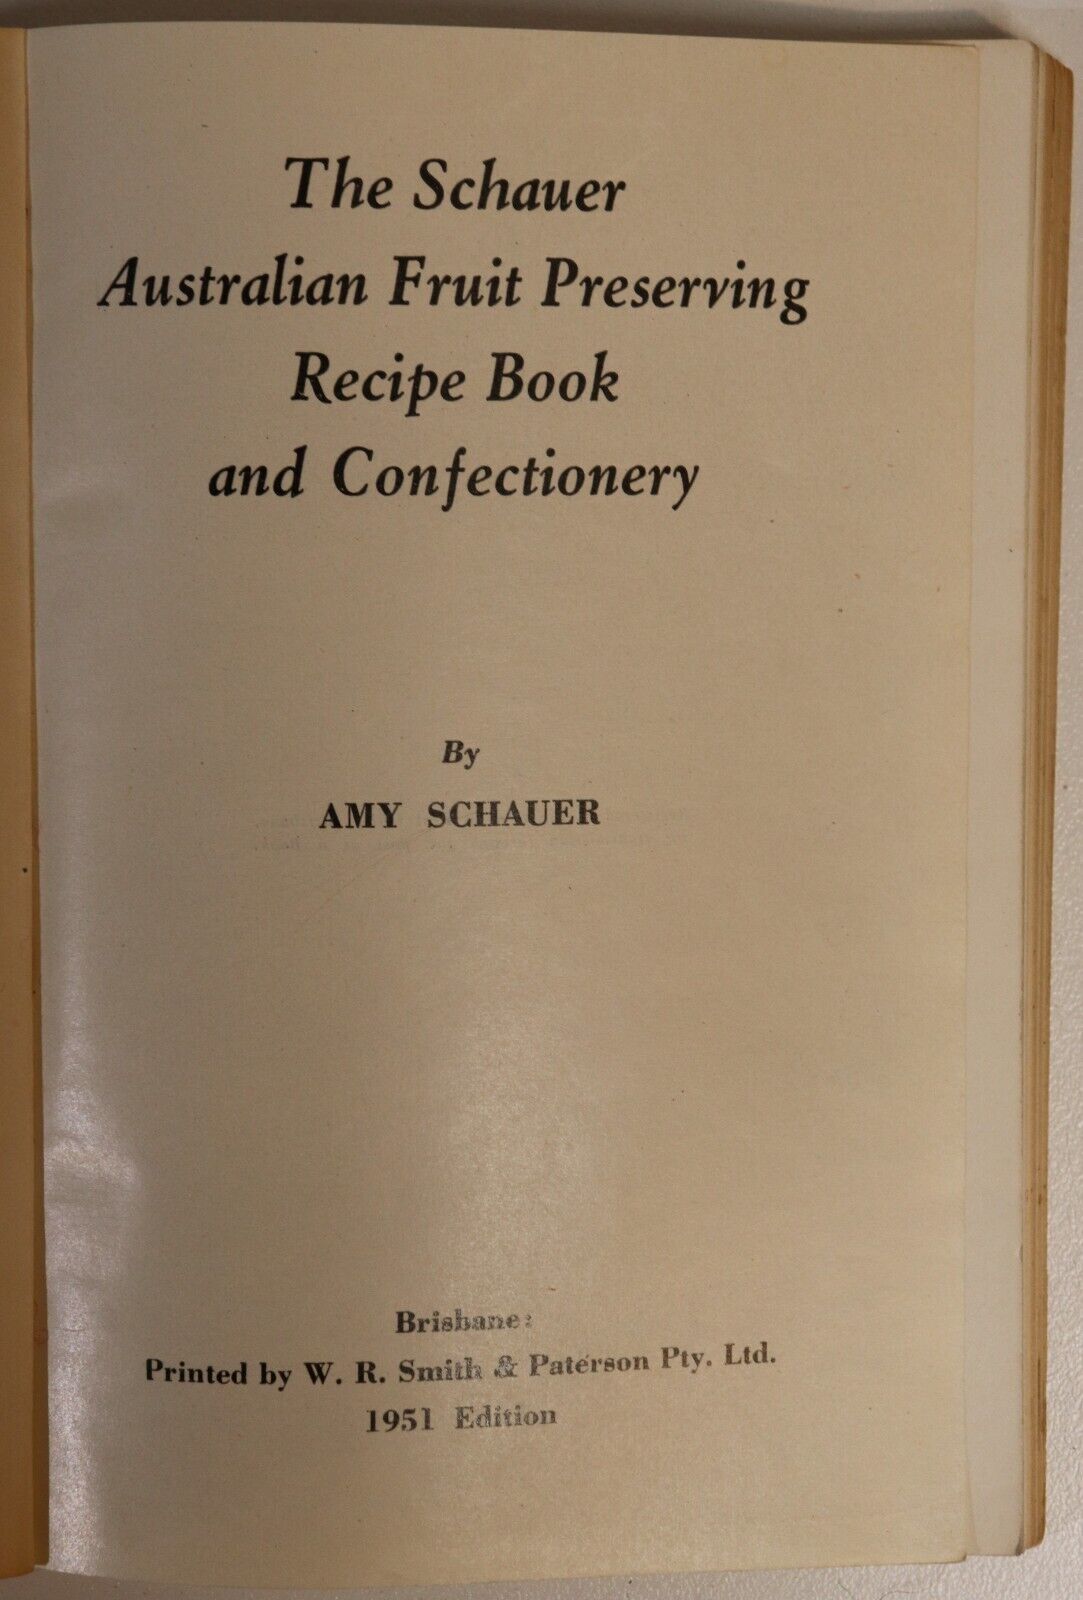 The Schauer Fruit Preserving Book - 1951 - Vintage Australian Cook Book - 0